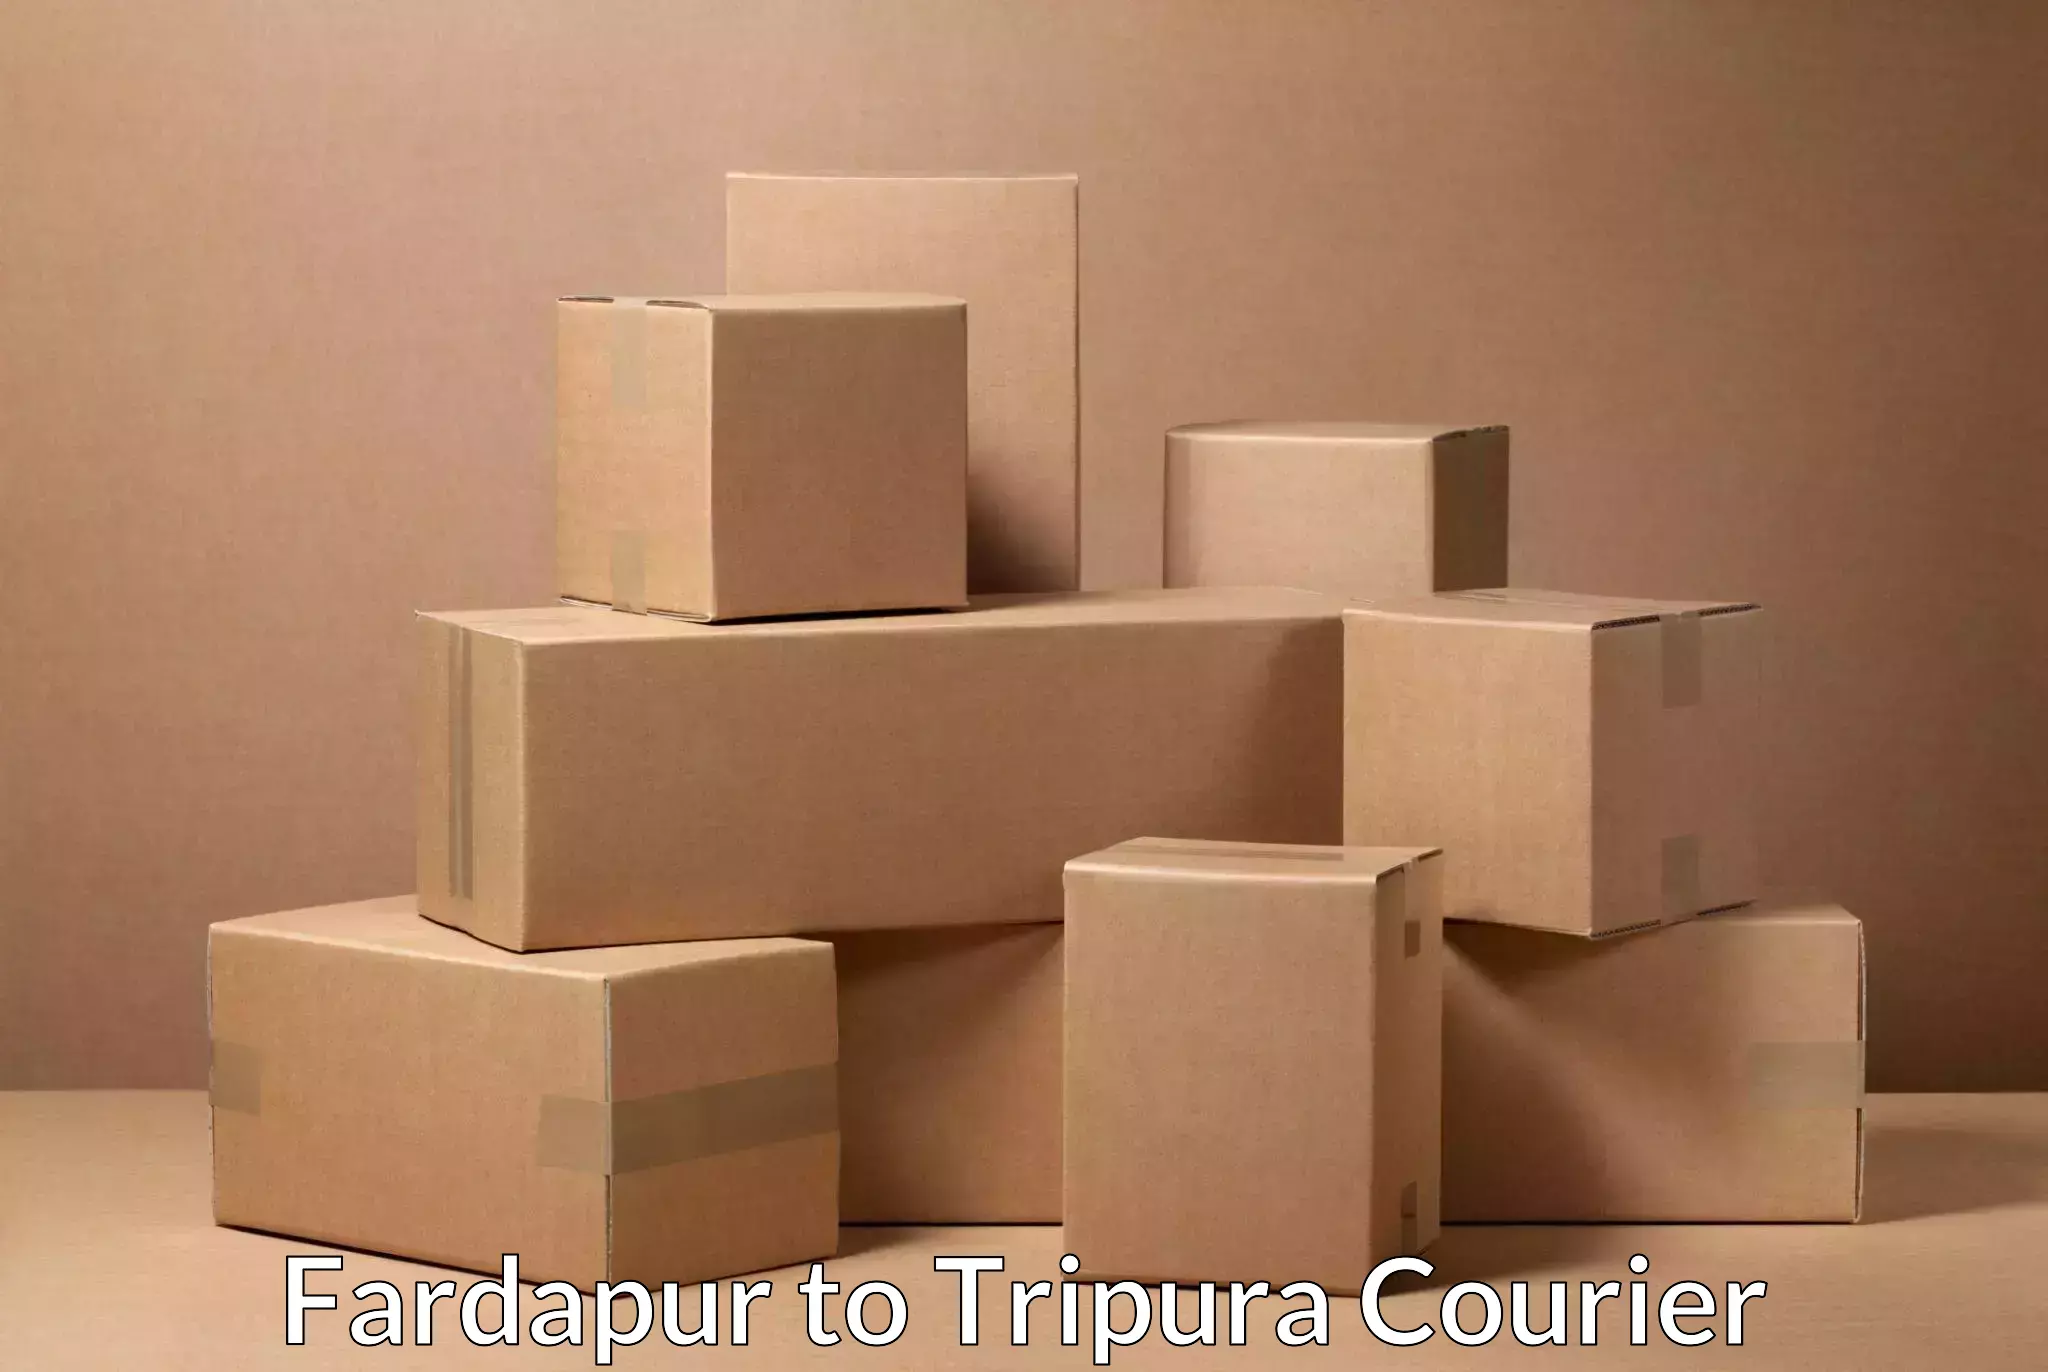 Professional courier handling Fardapur to Udaipur Tripura